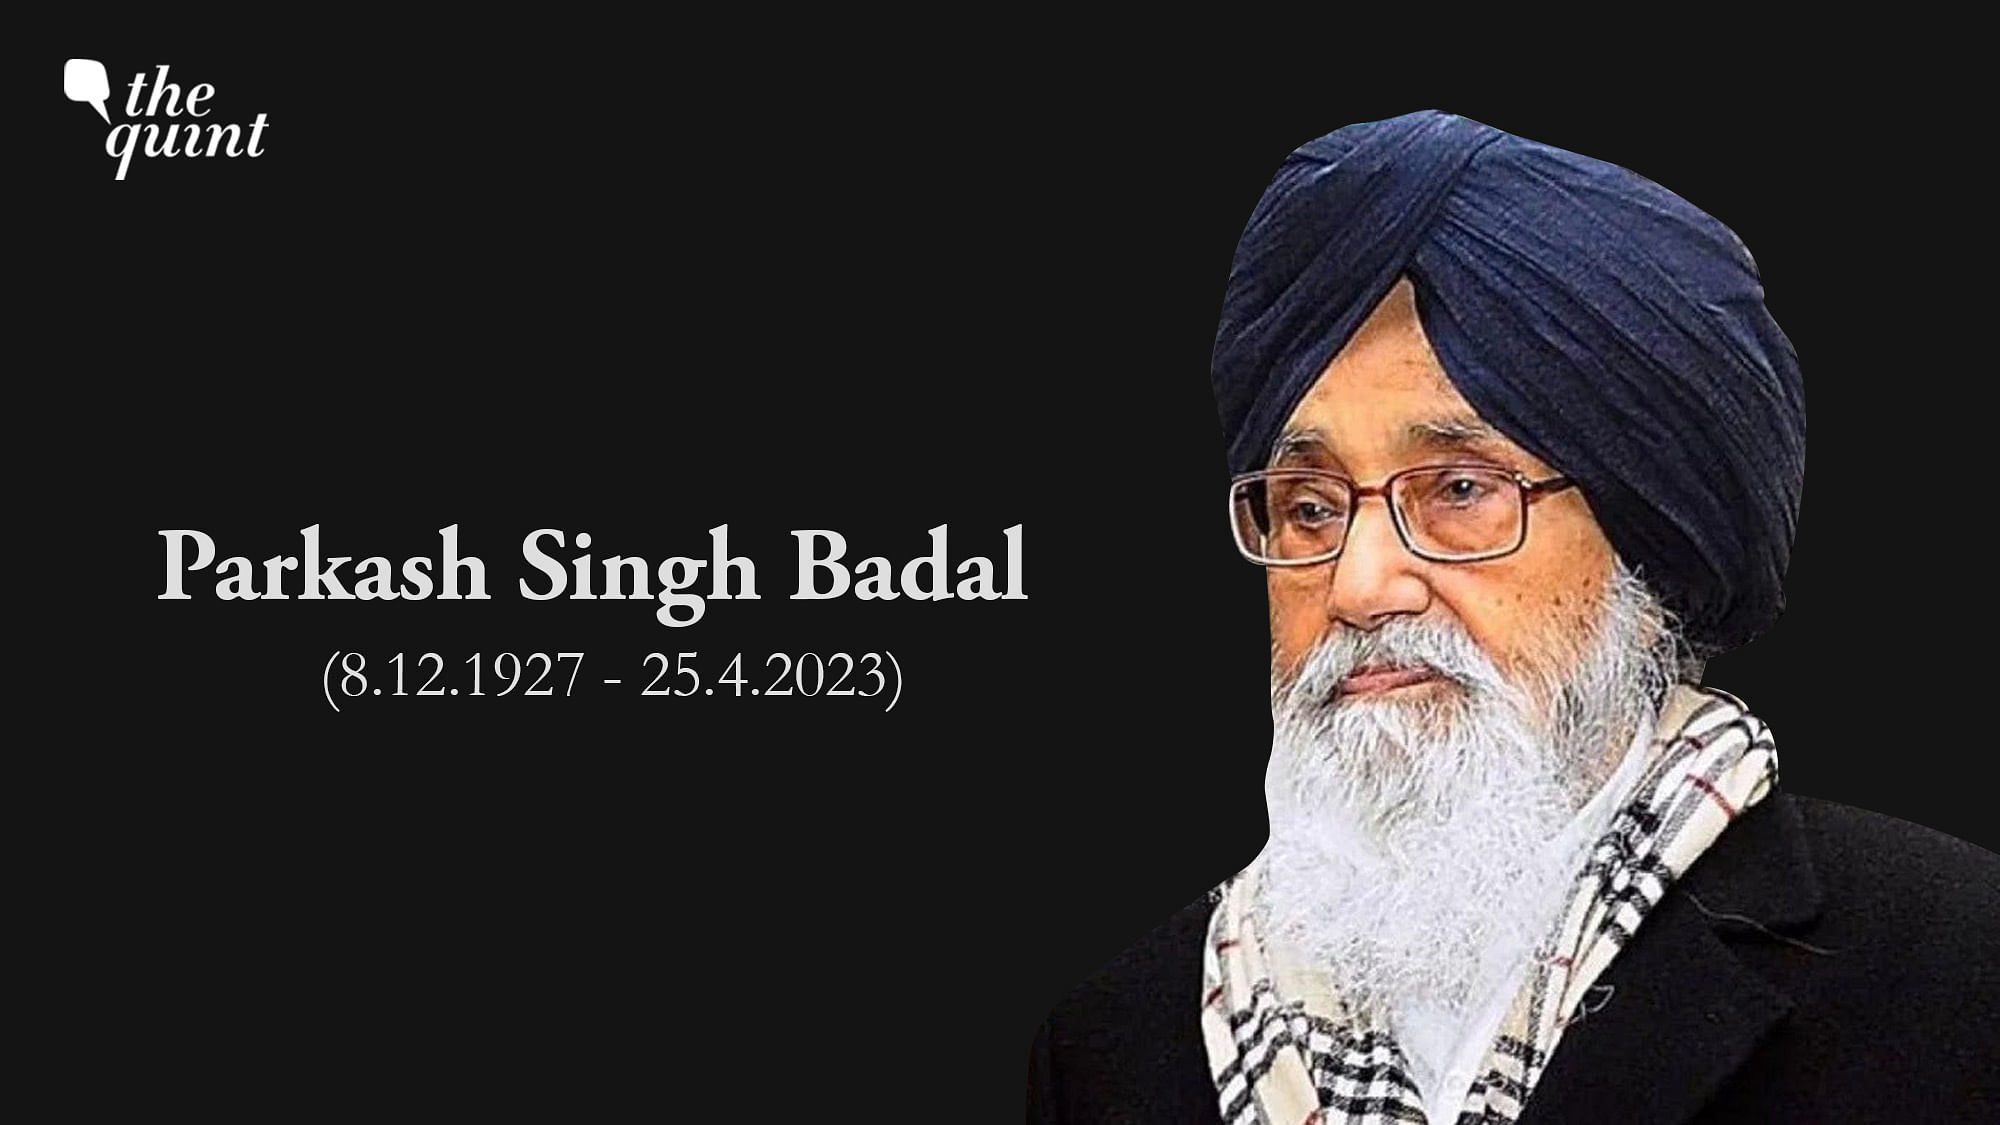 <div class="paragraphs"><p>Former Punjab Chief Minister Parkash Singh Badal died on 26 April.&nbsp;</p></div>